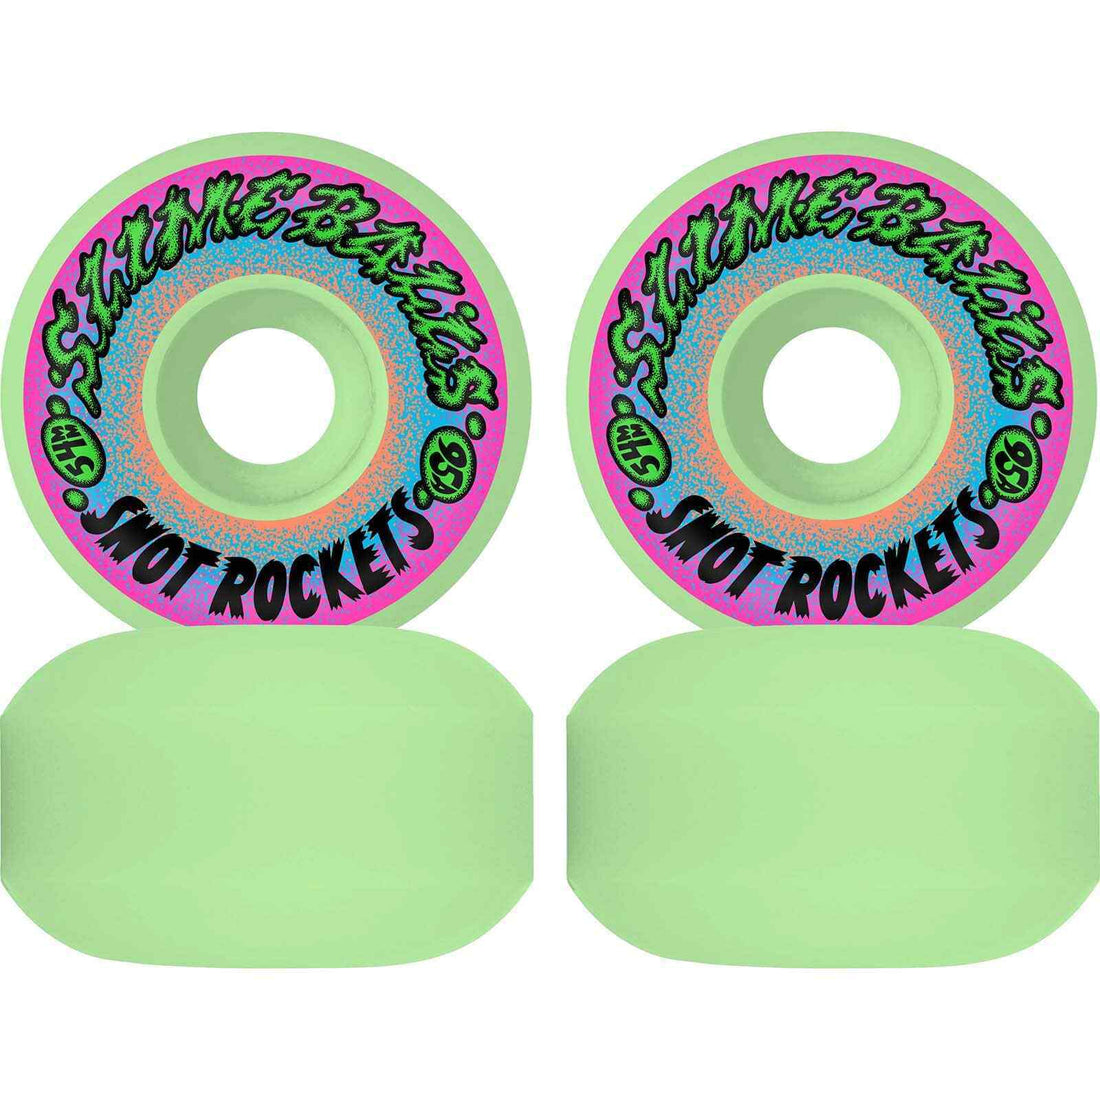 Santa Cruz Slime Balls Snot Rockets Skateboard Wheels - Acid Green 54mm